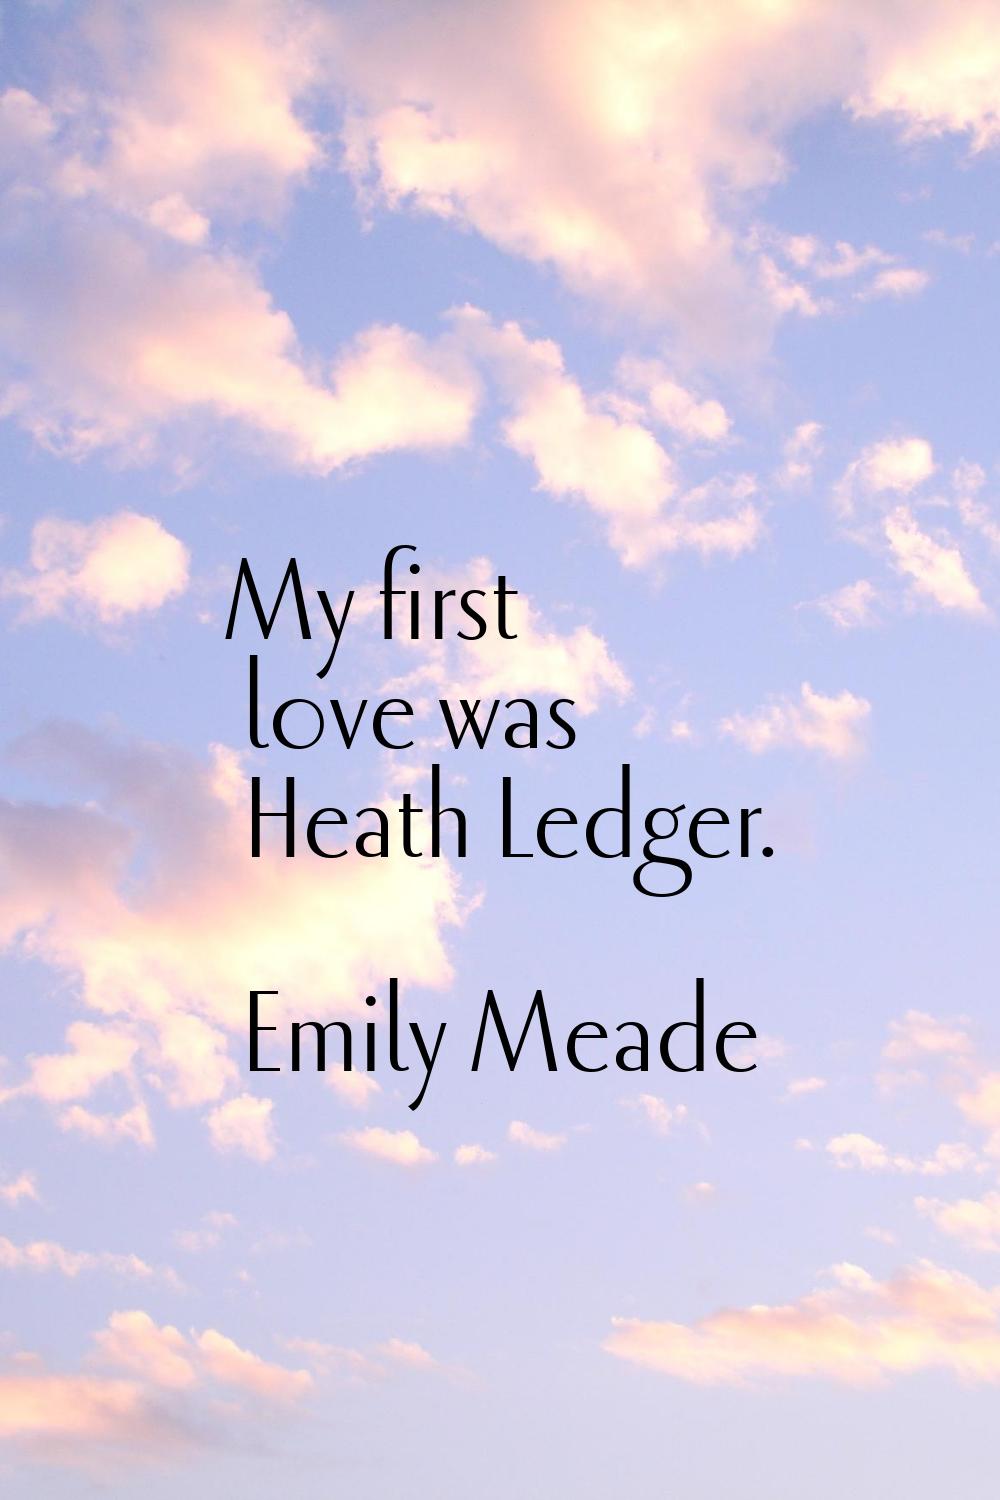 My first love was Heath Ledger.